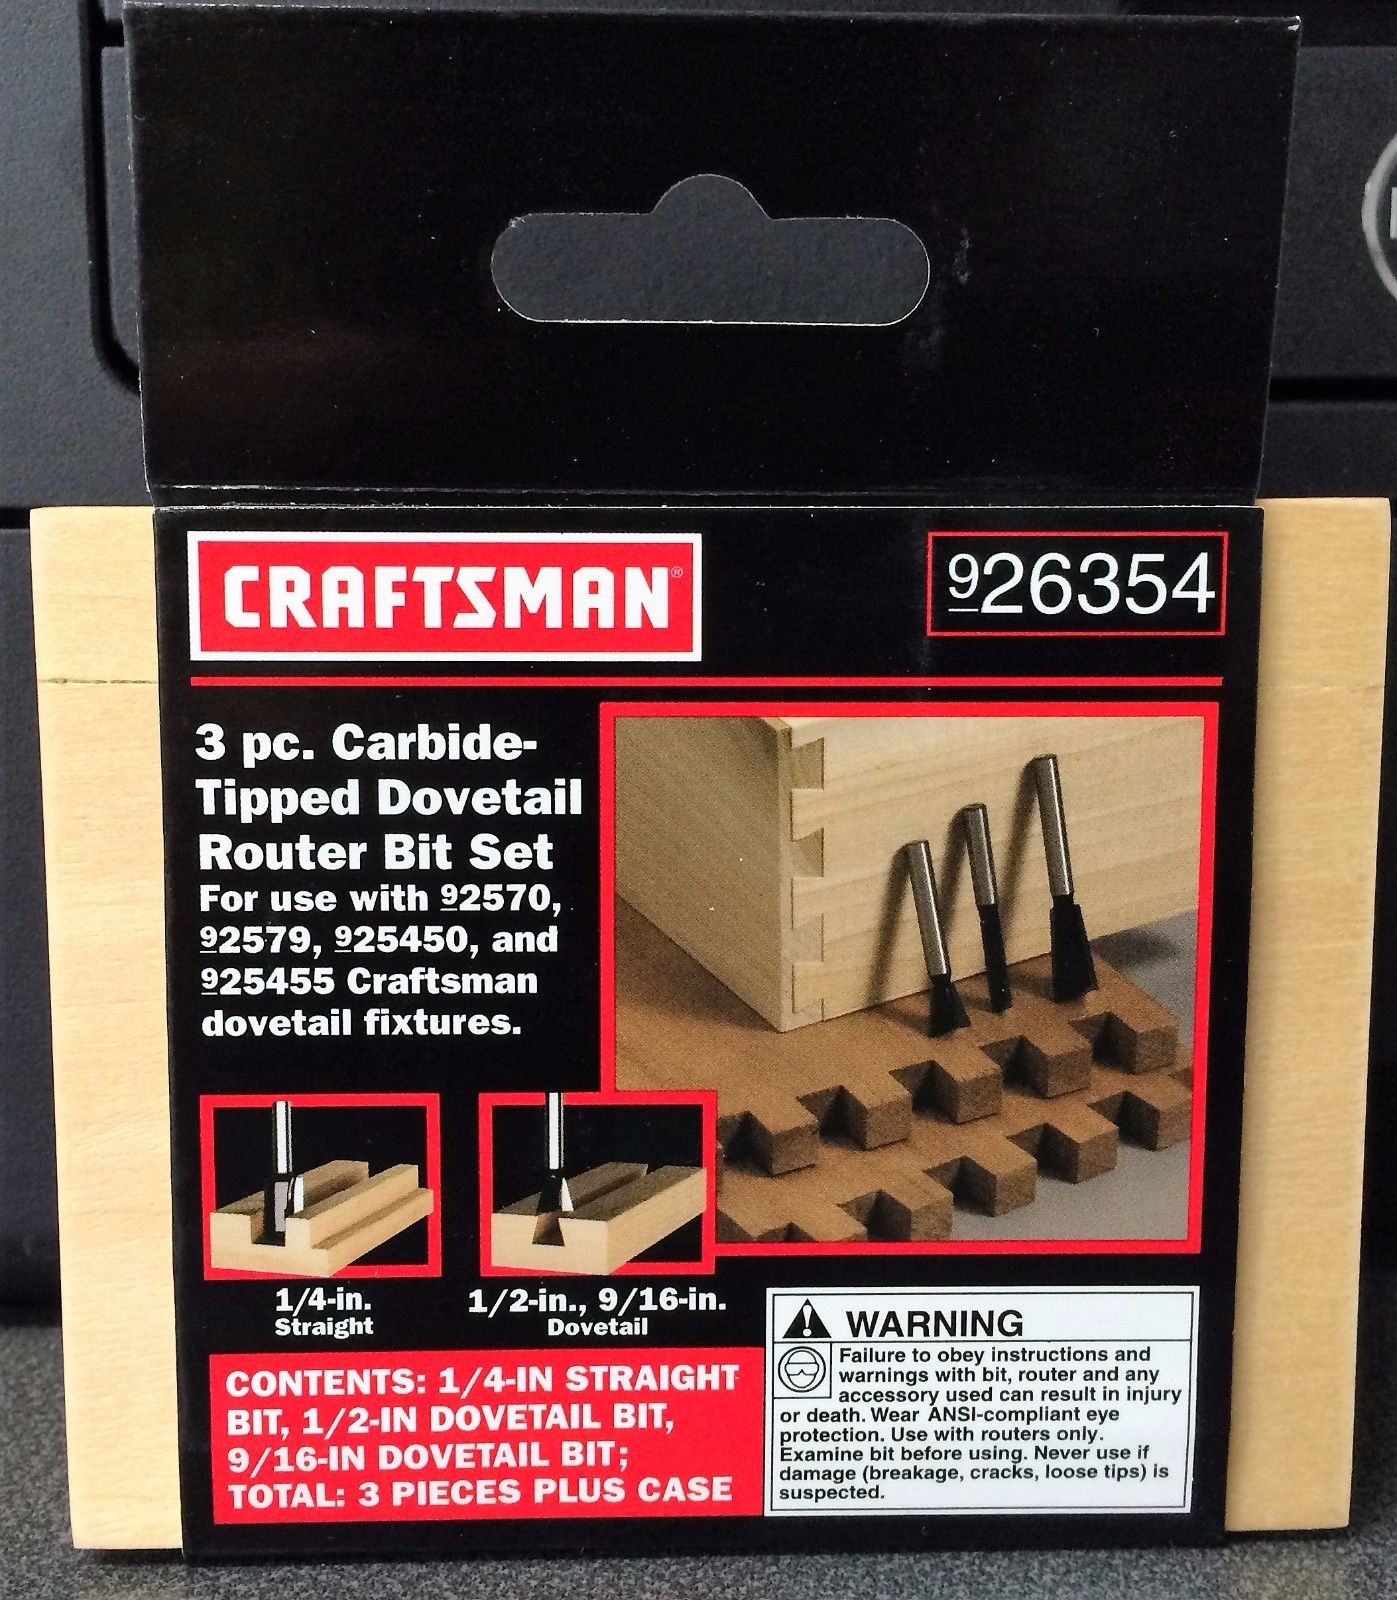 Craftsman 26354 3 Piece Carbide Tipped Dovetail Router Bit Set 1/4" Shank